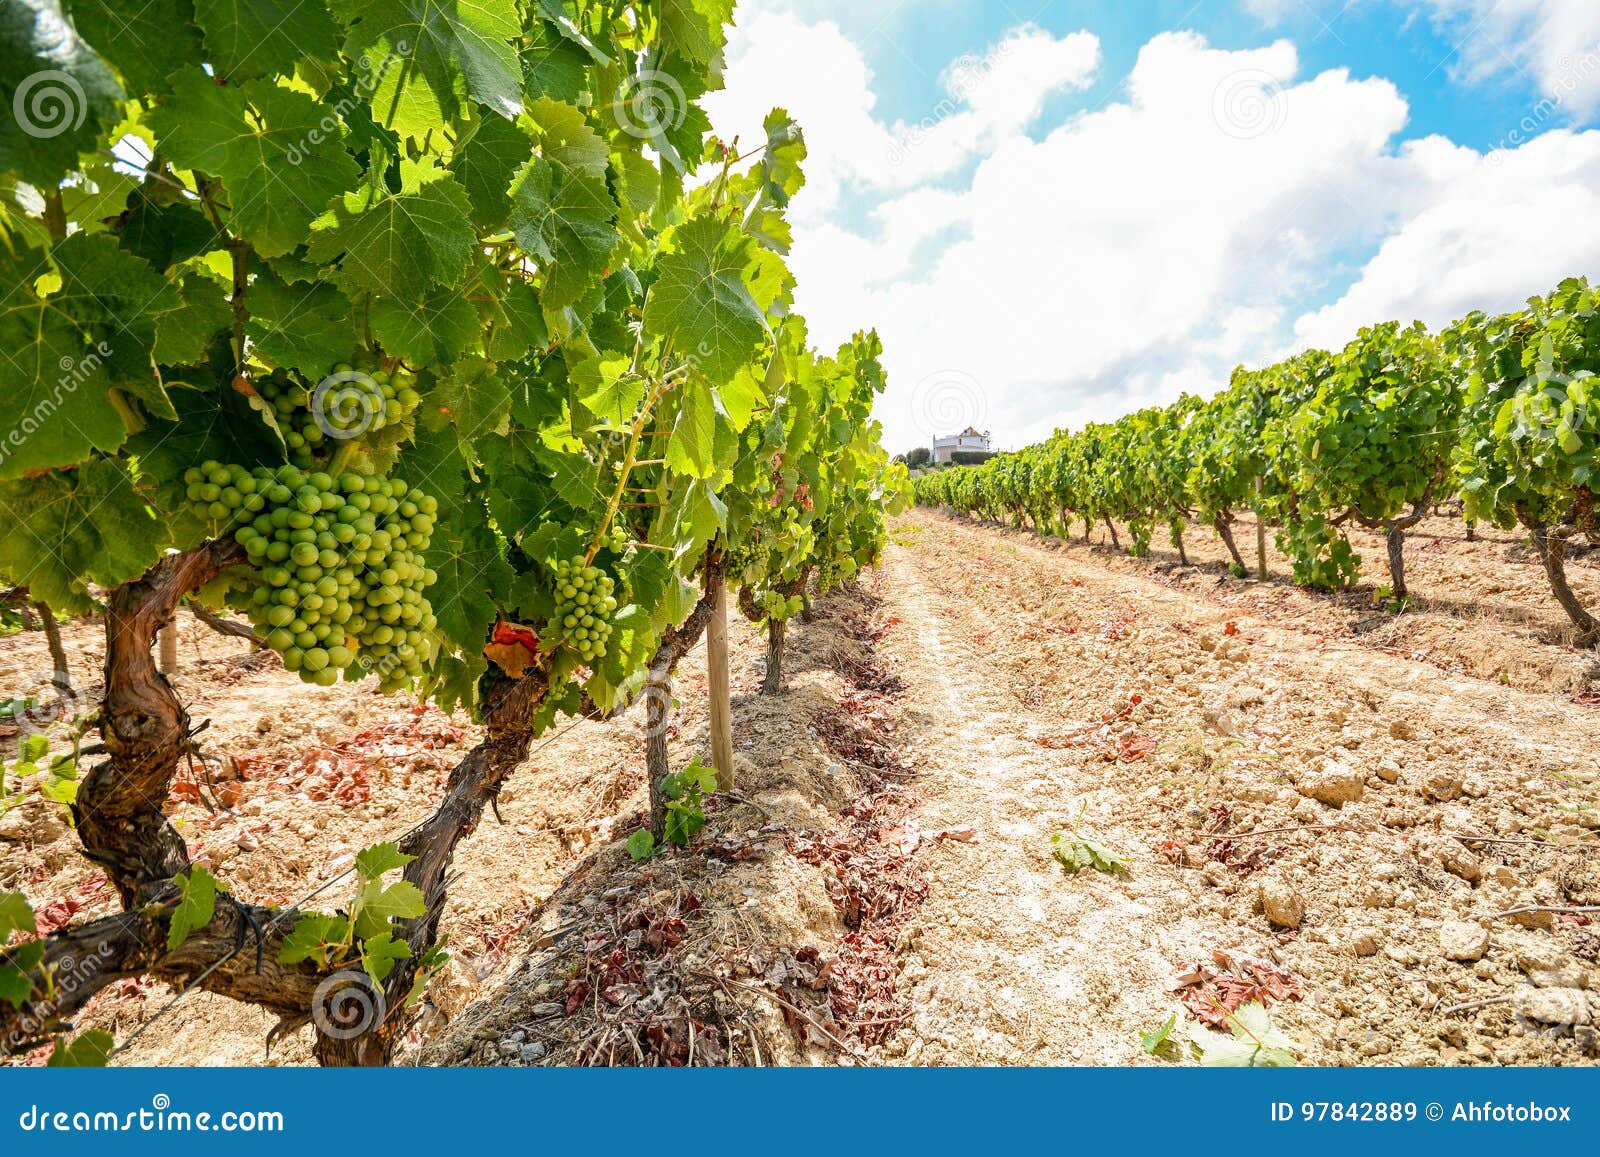 old vineyards with red wine grapes in the alentejo wine region near evora, portugal